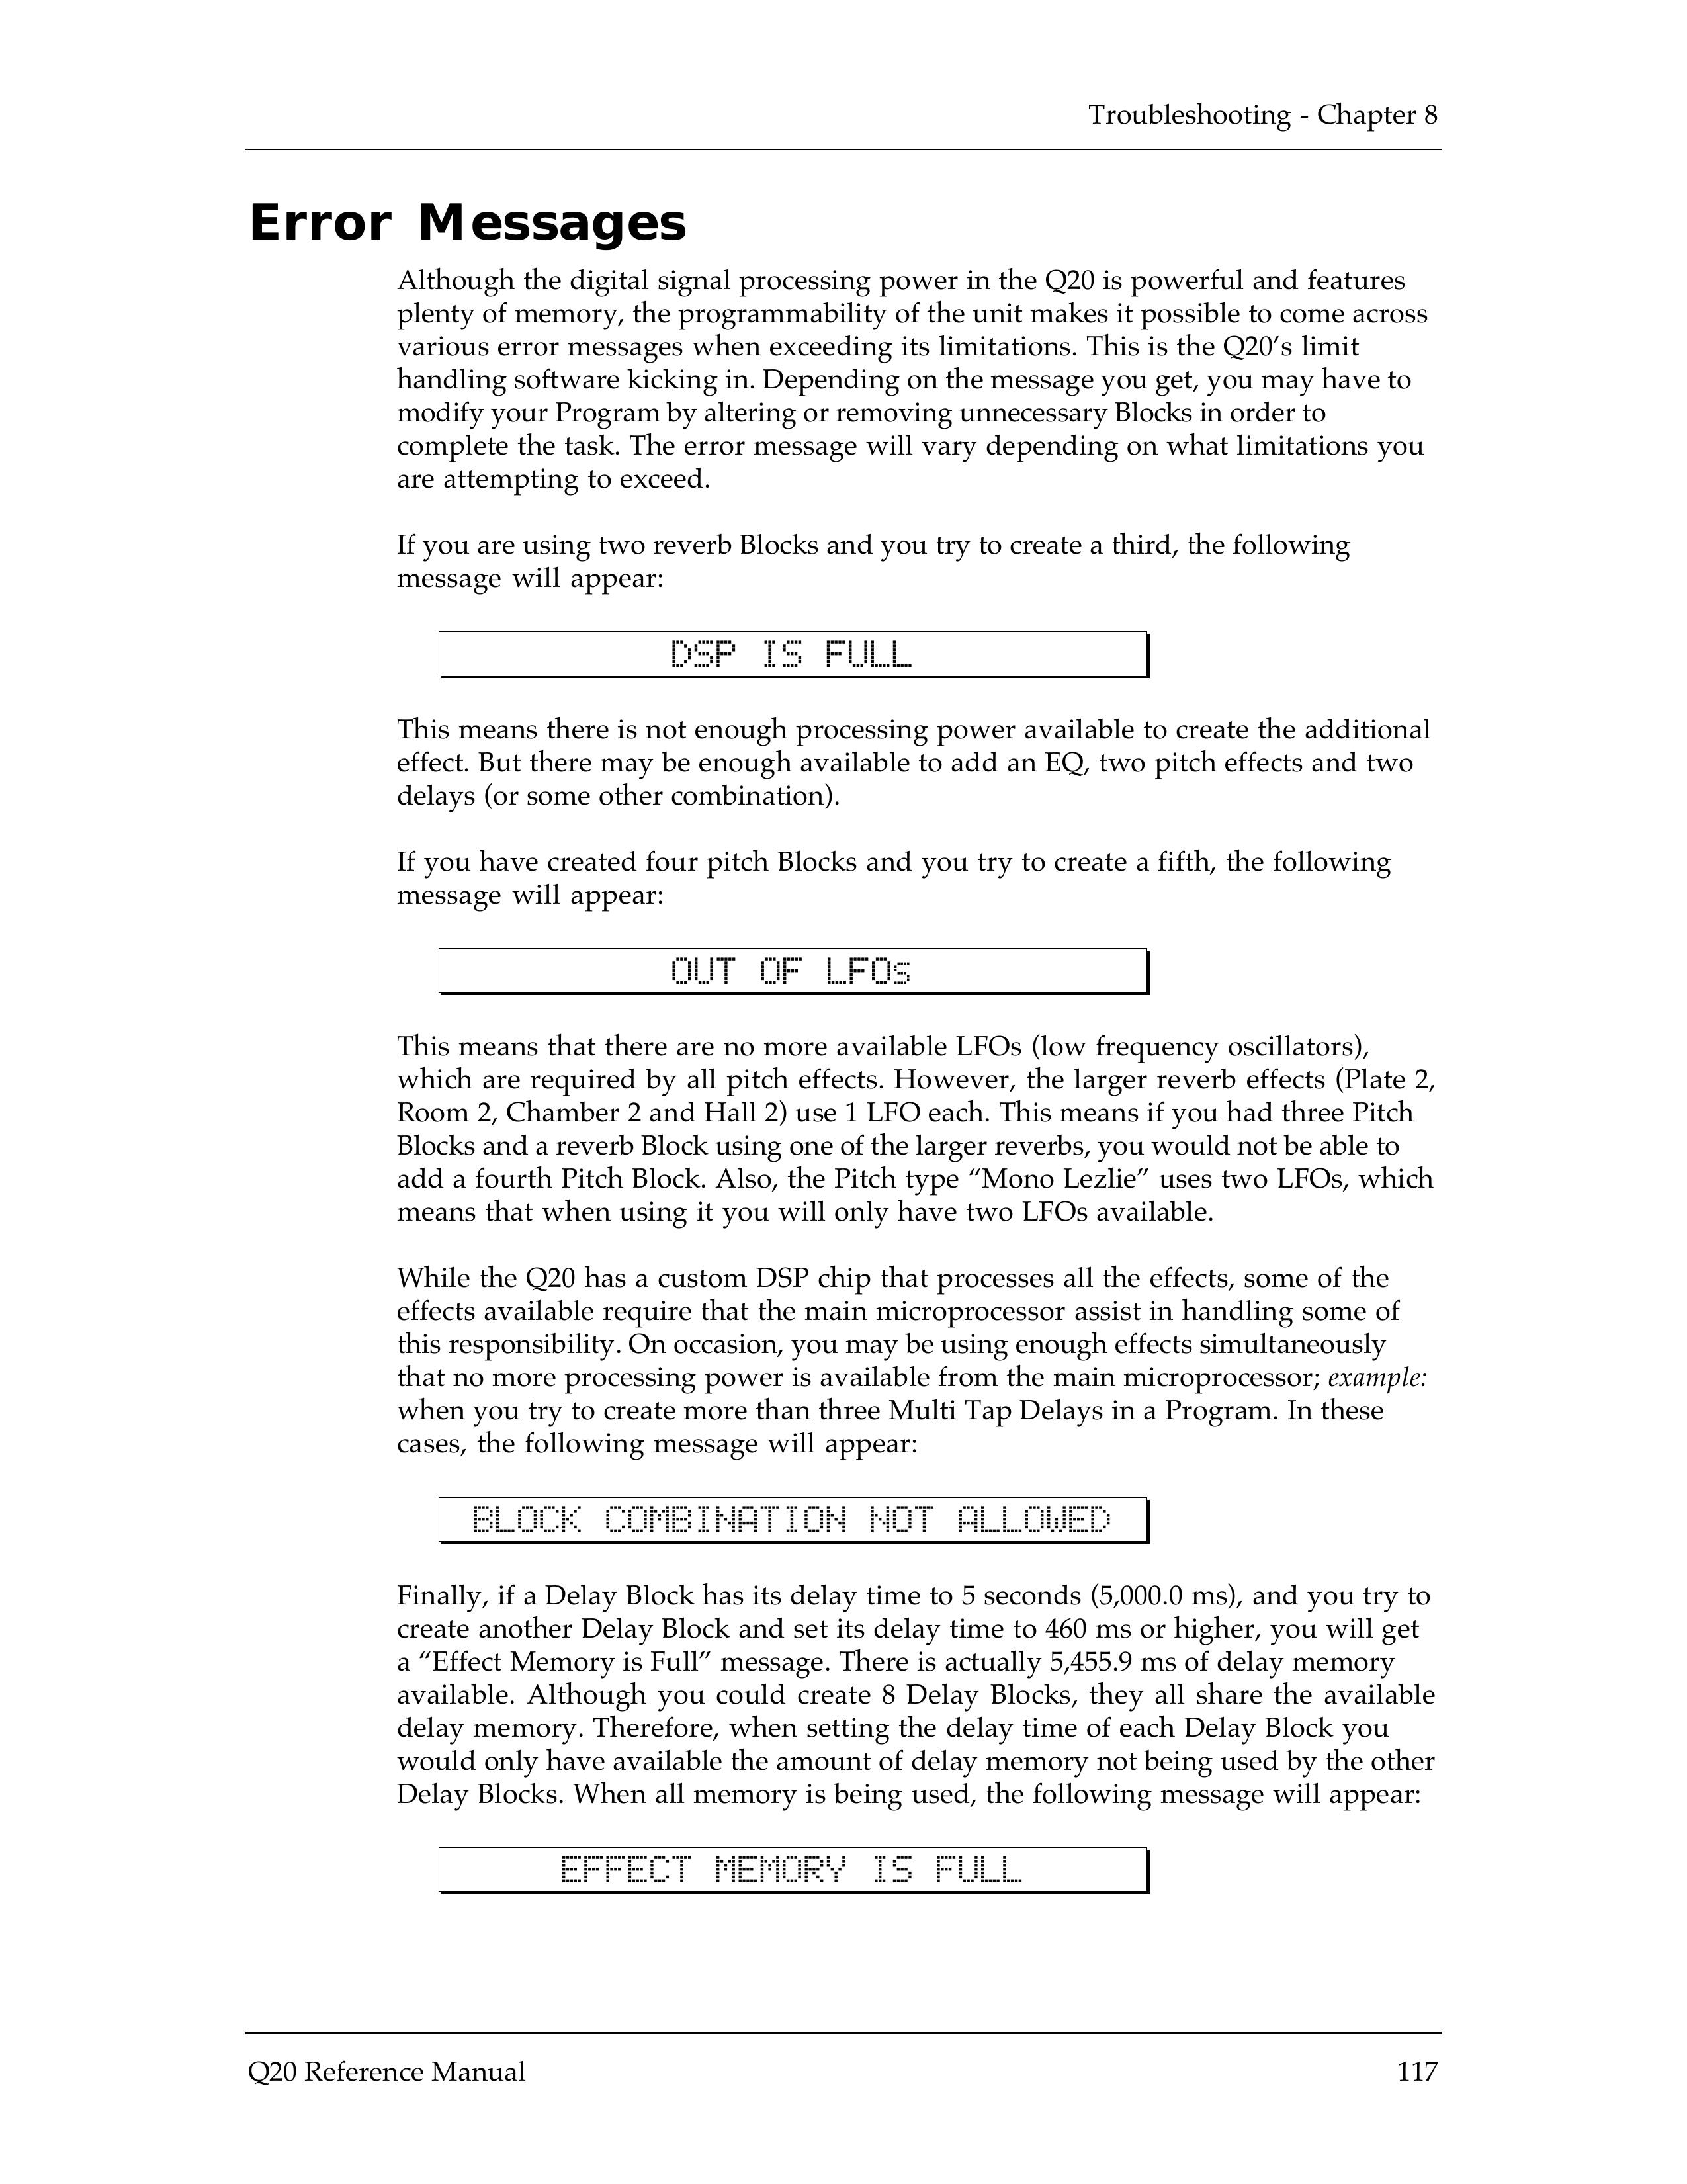 Alesis Q20 DJ Equipment User Manual (Page 119)